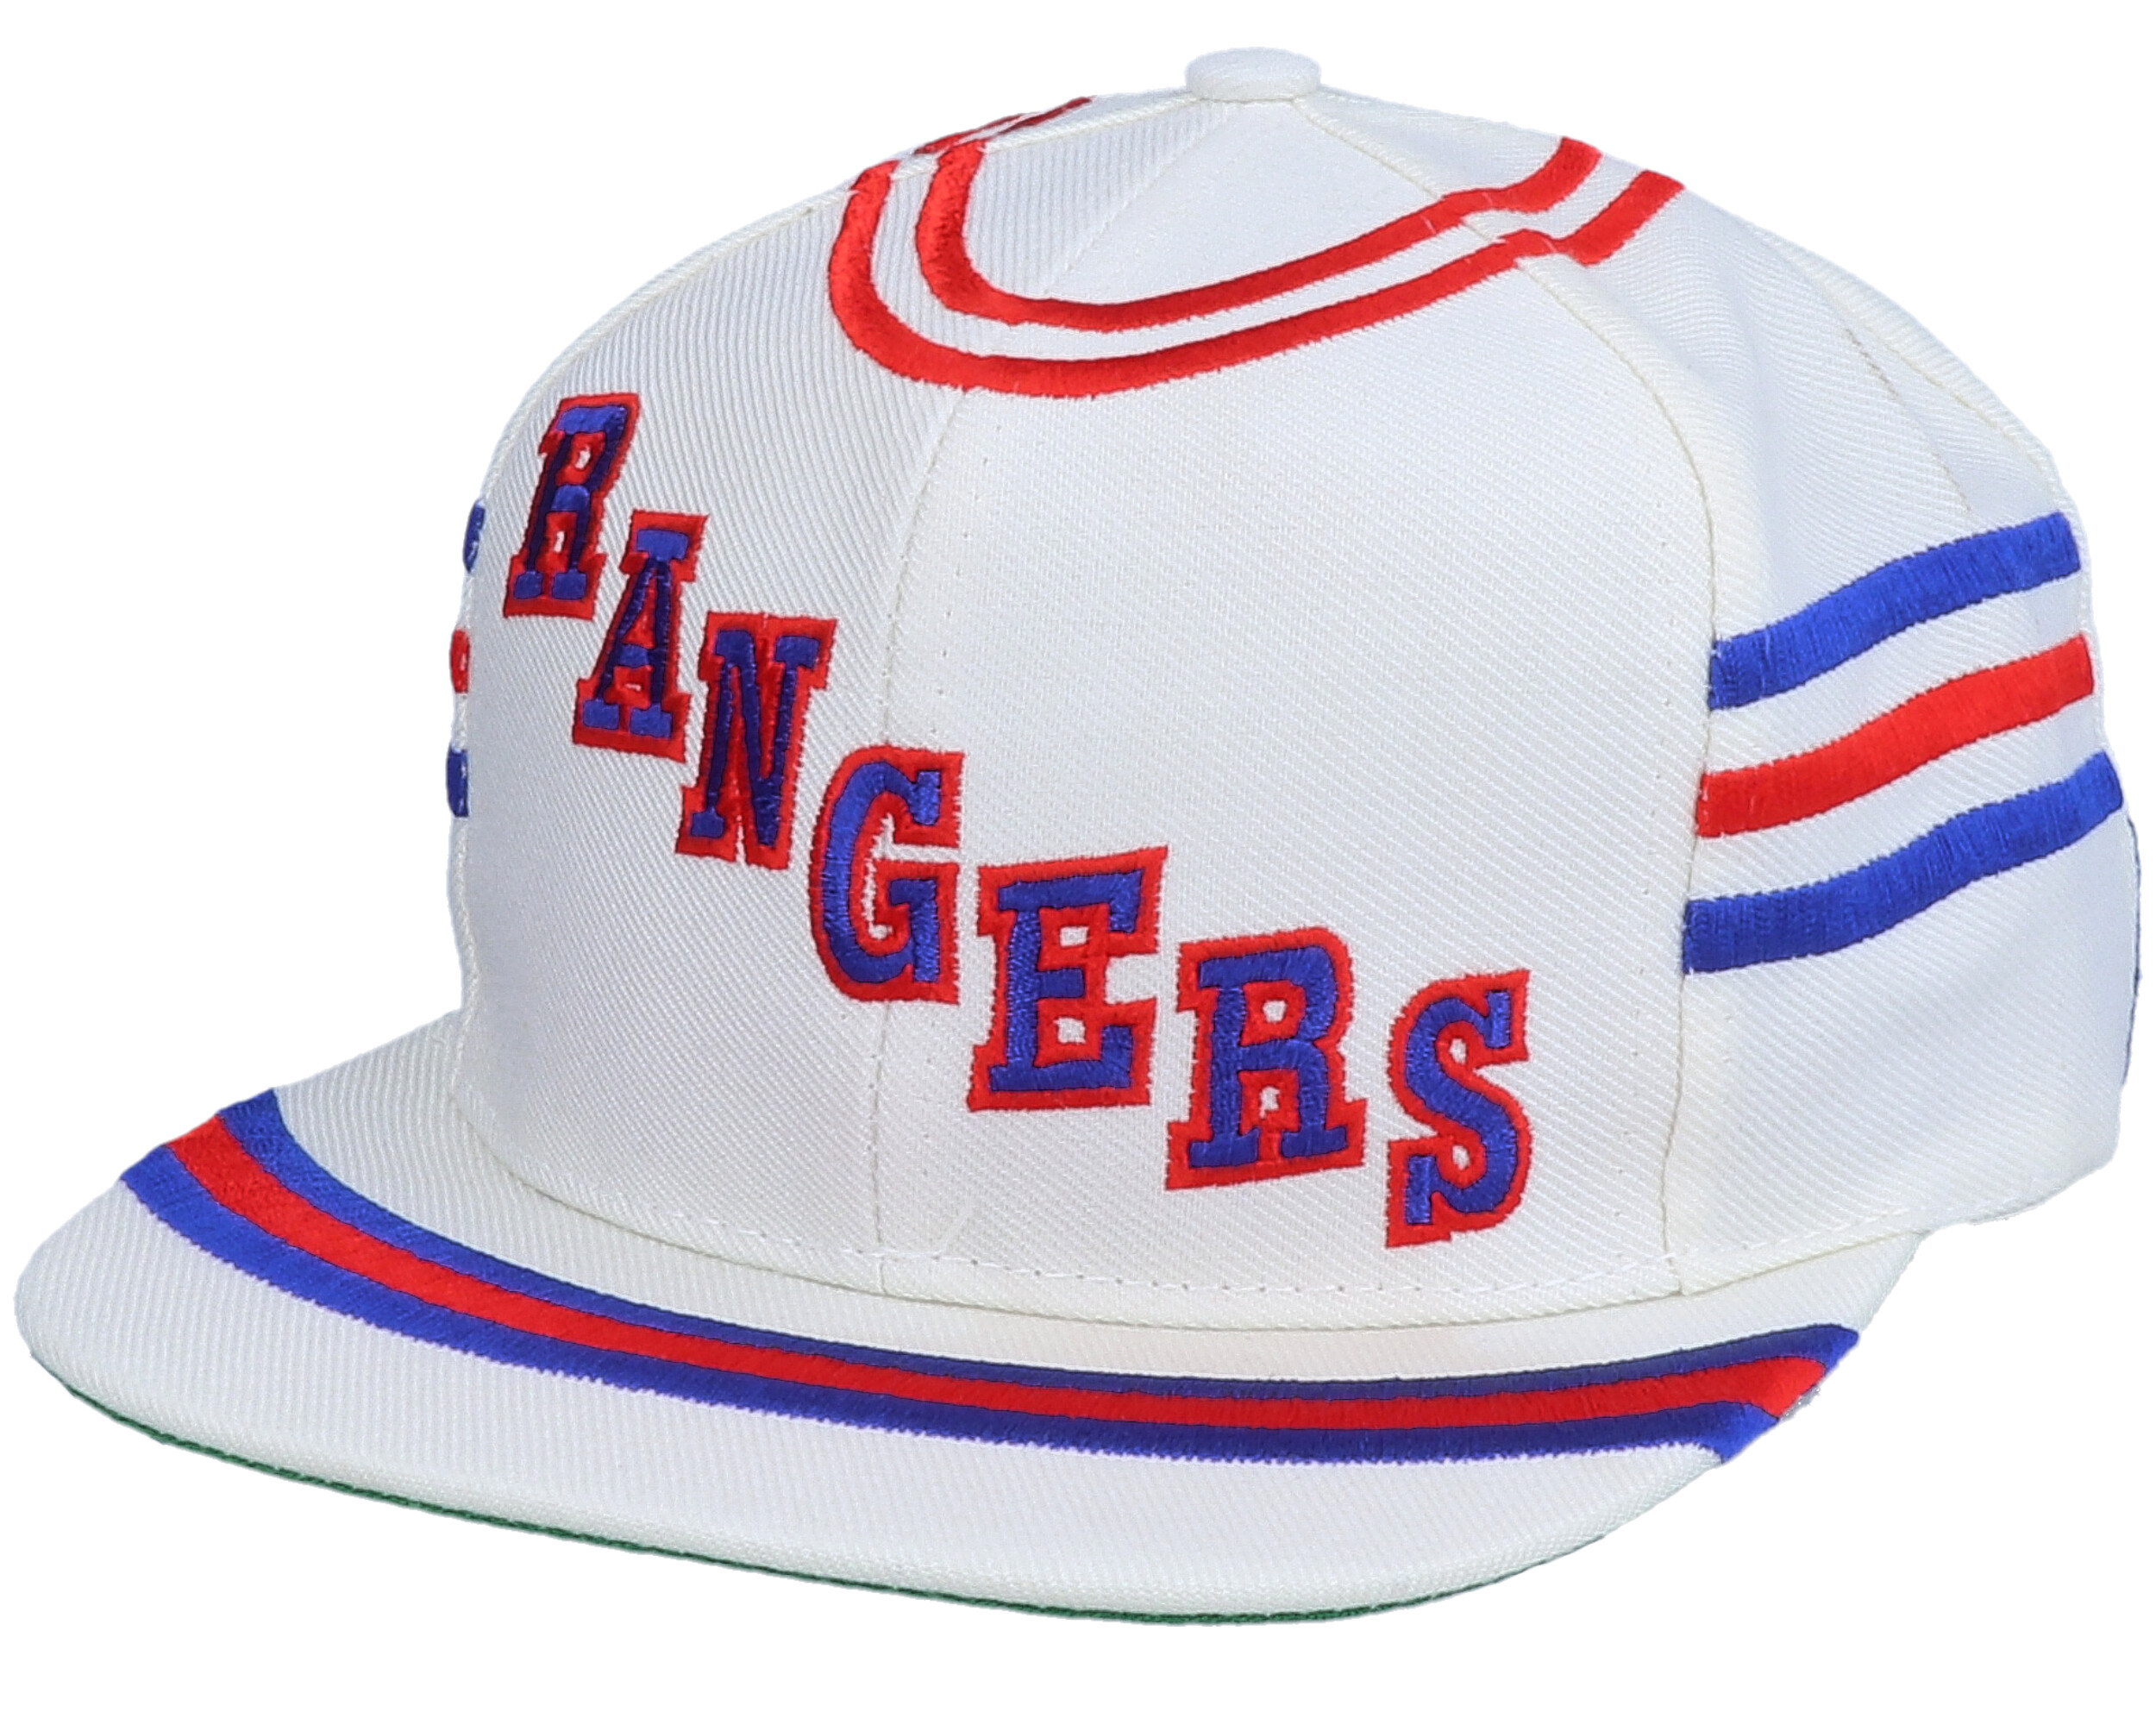 Vintage New York Rangers NHL Twins Enterprise Hat Snapback Cap New Men